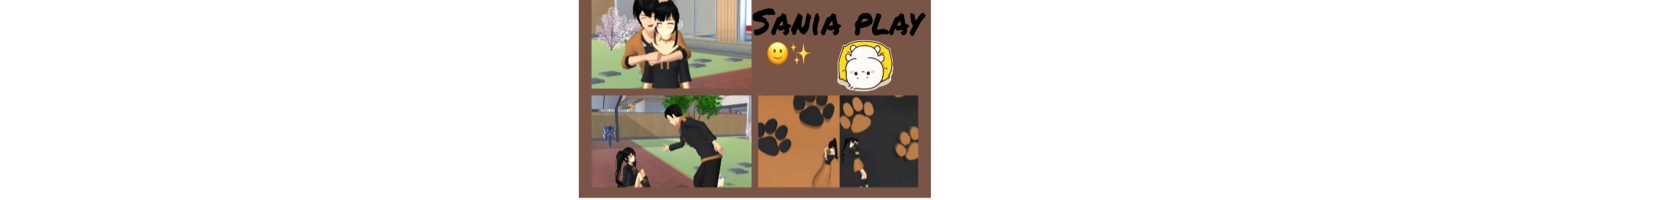  『♪Sania play | سانیا پلی♪』سلما خولدمT-T